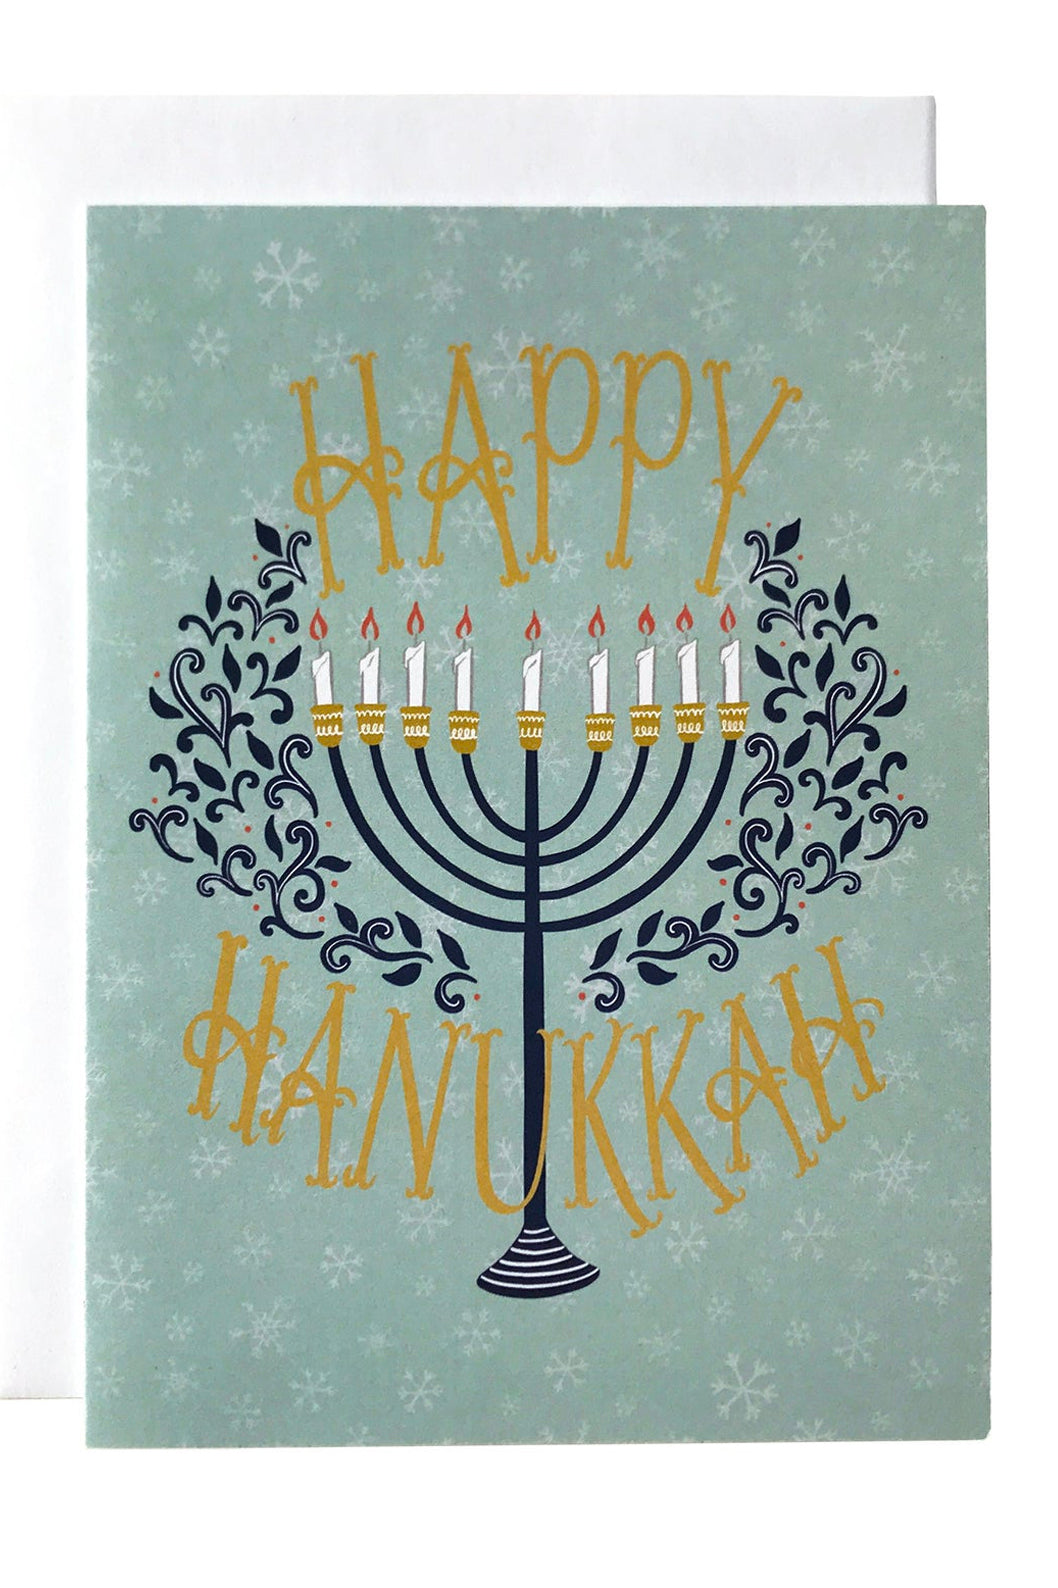 Hanukkah Card